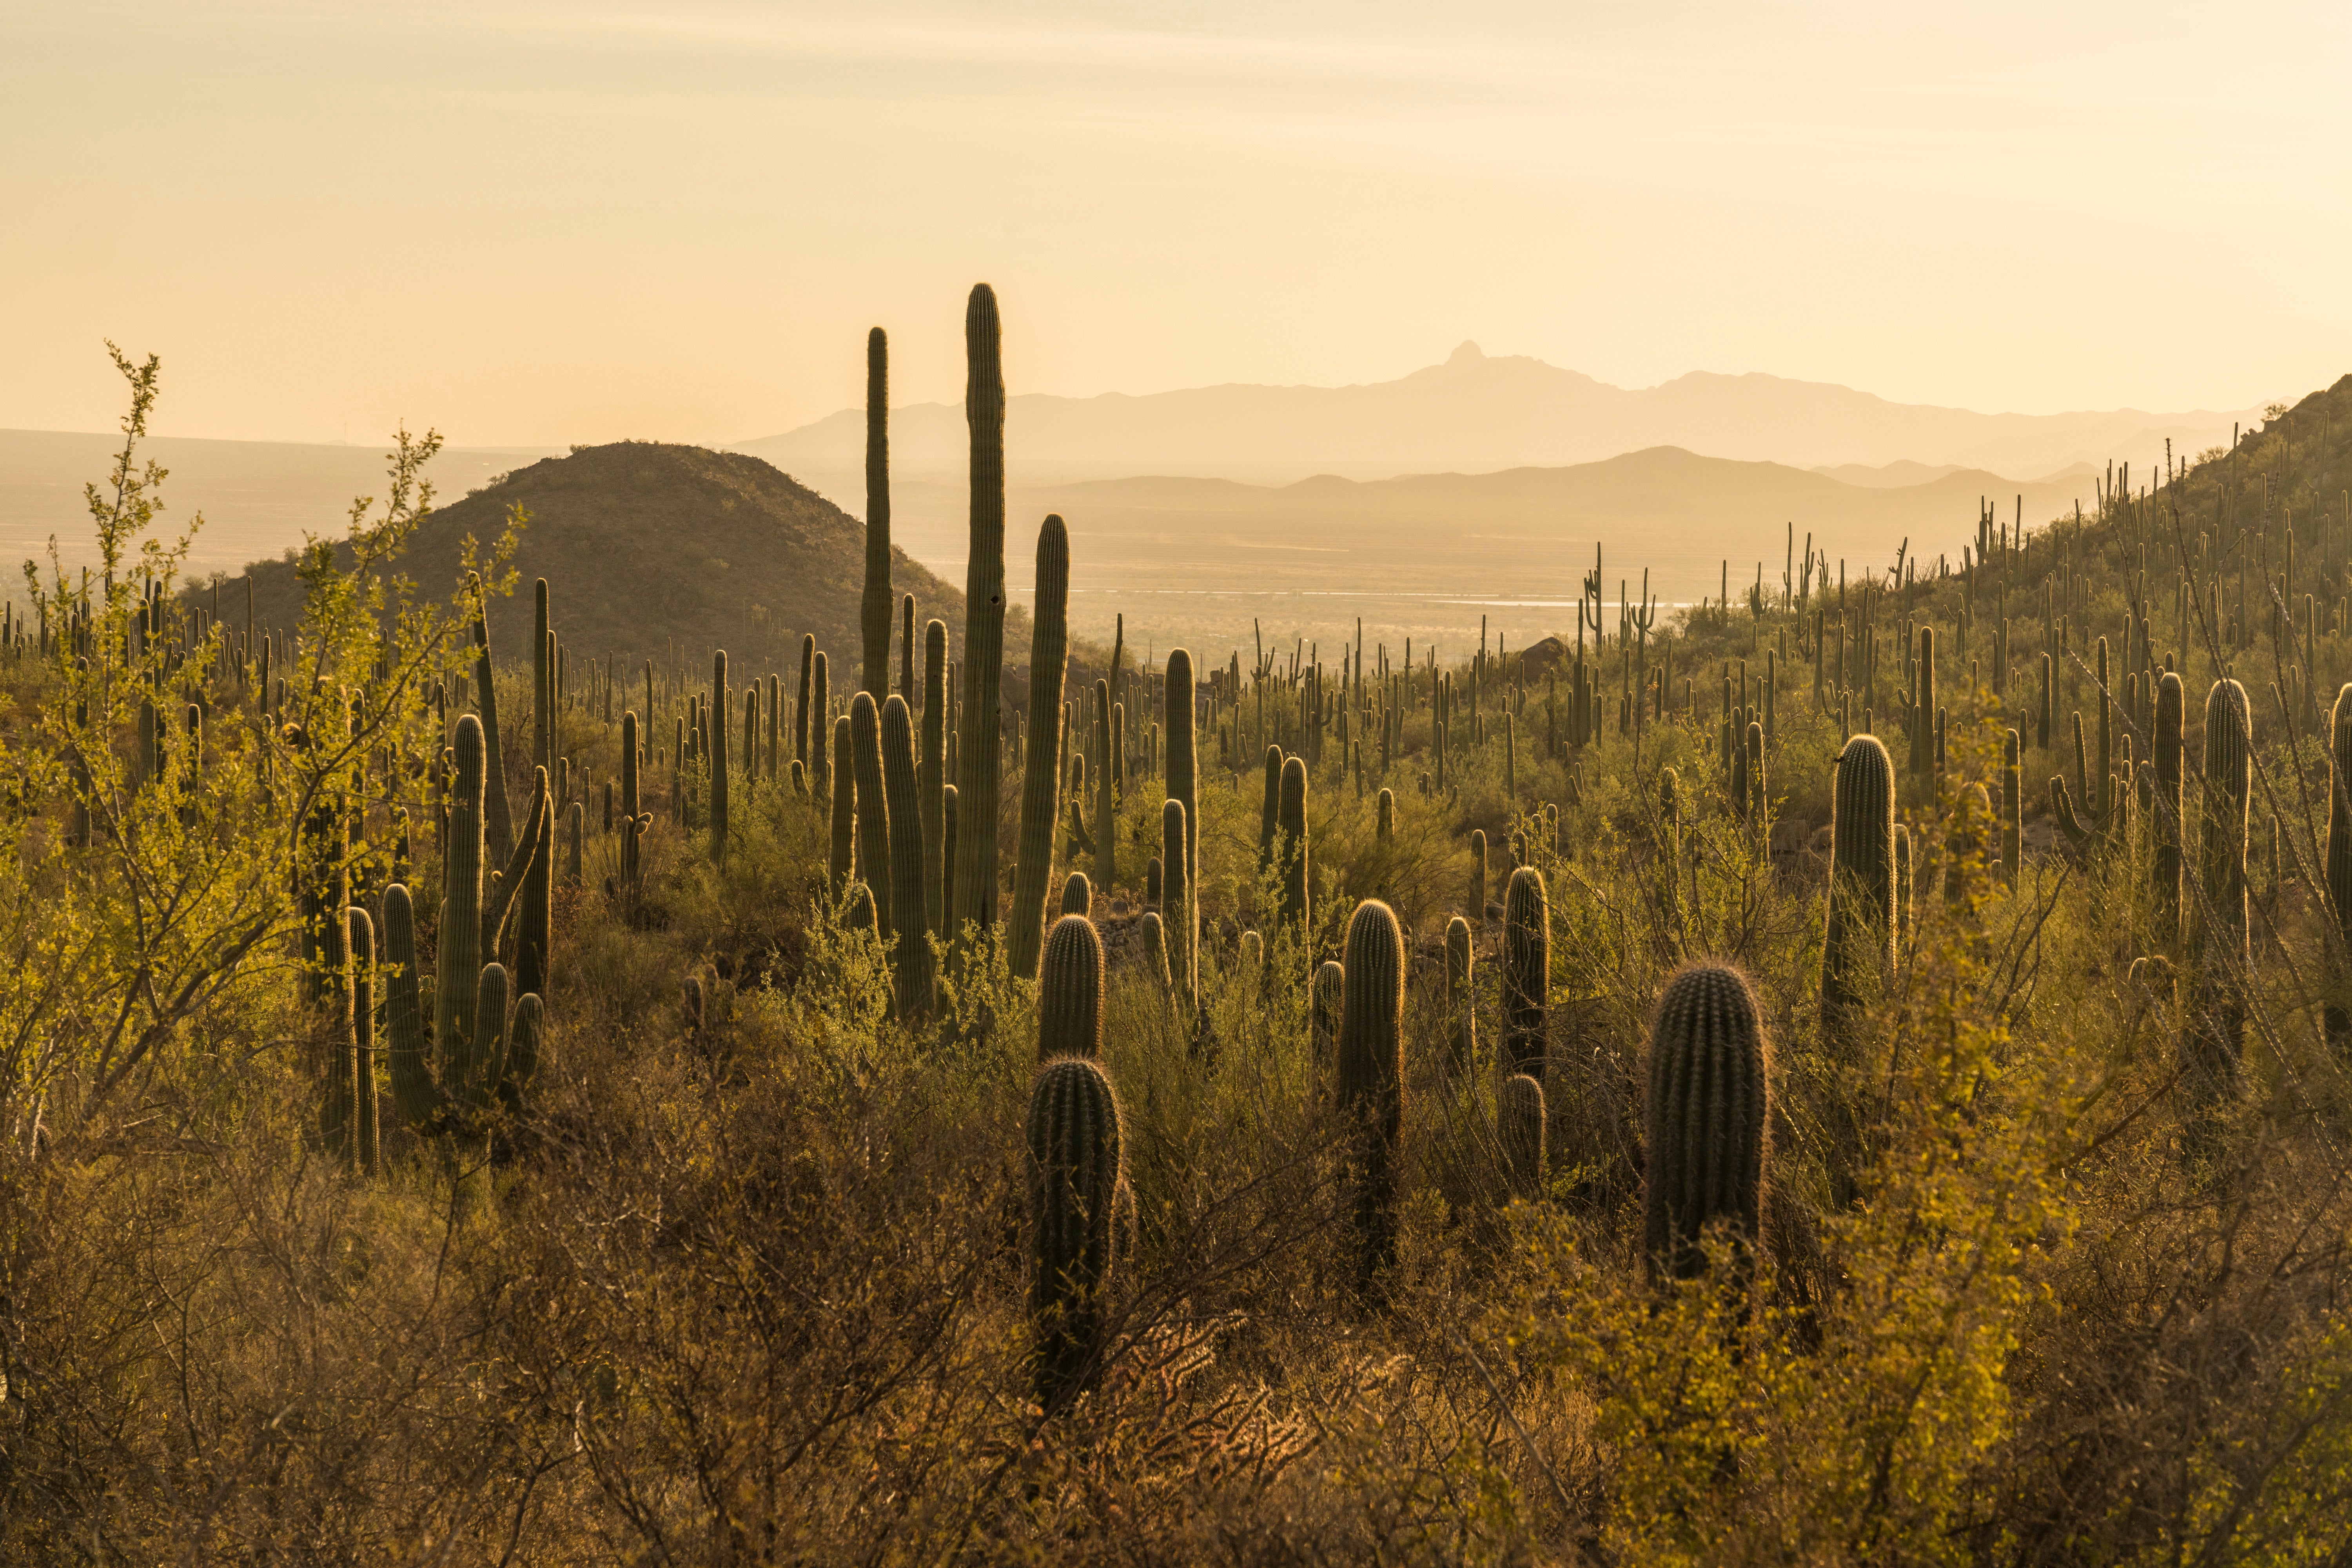 A forest of saguaro cacti among other plants.  (Photo: Jon G. Fuller / VWPics via AP Images, AP)